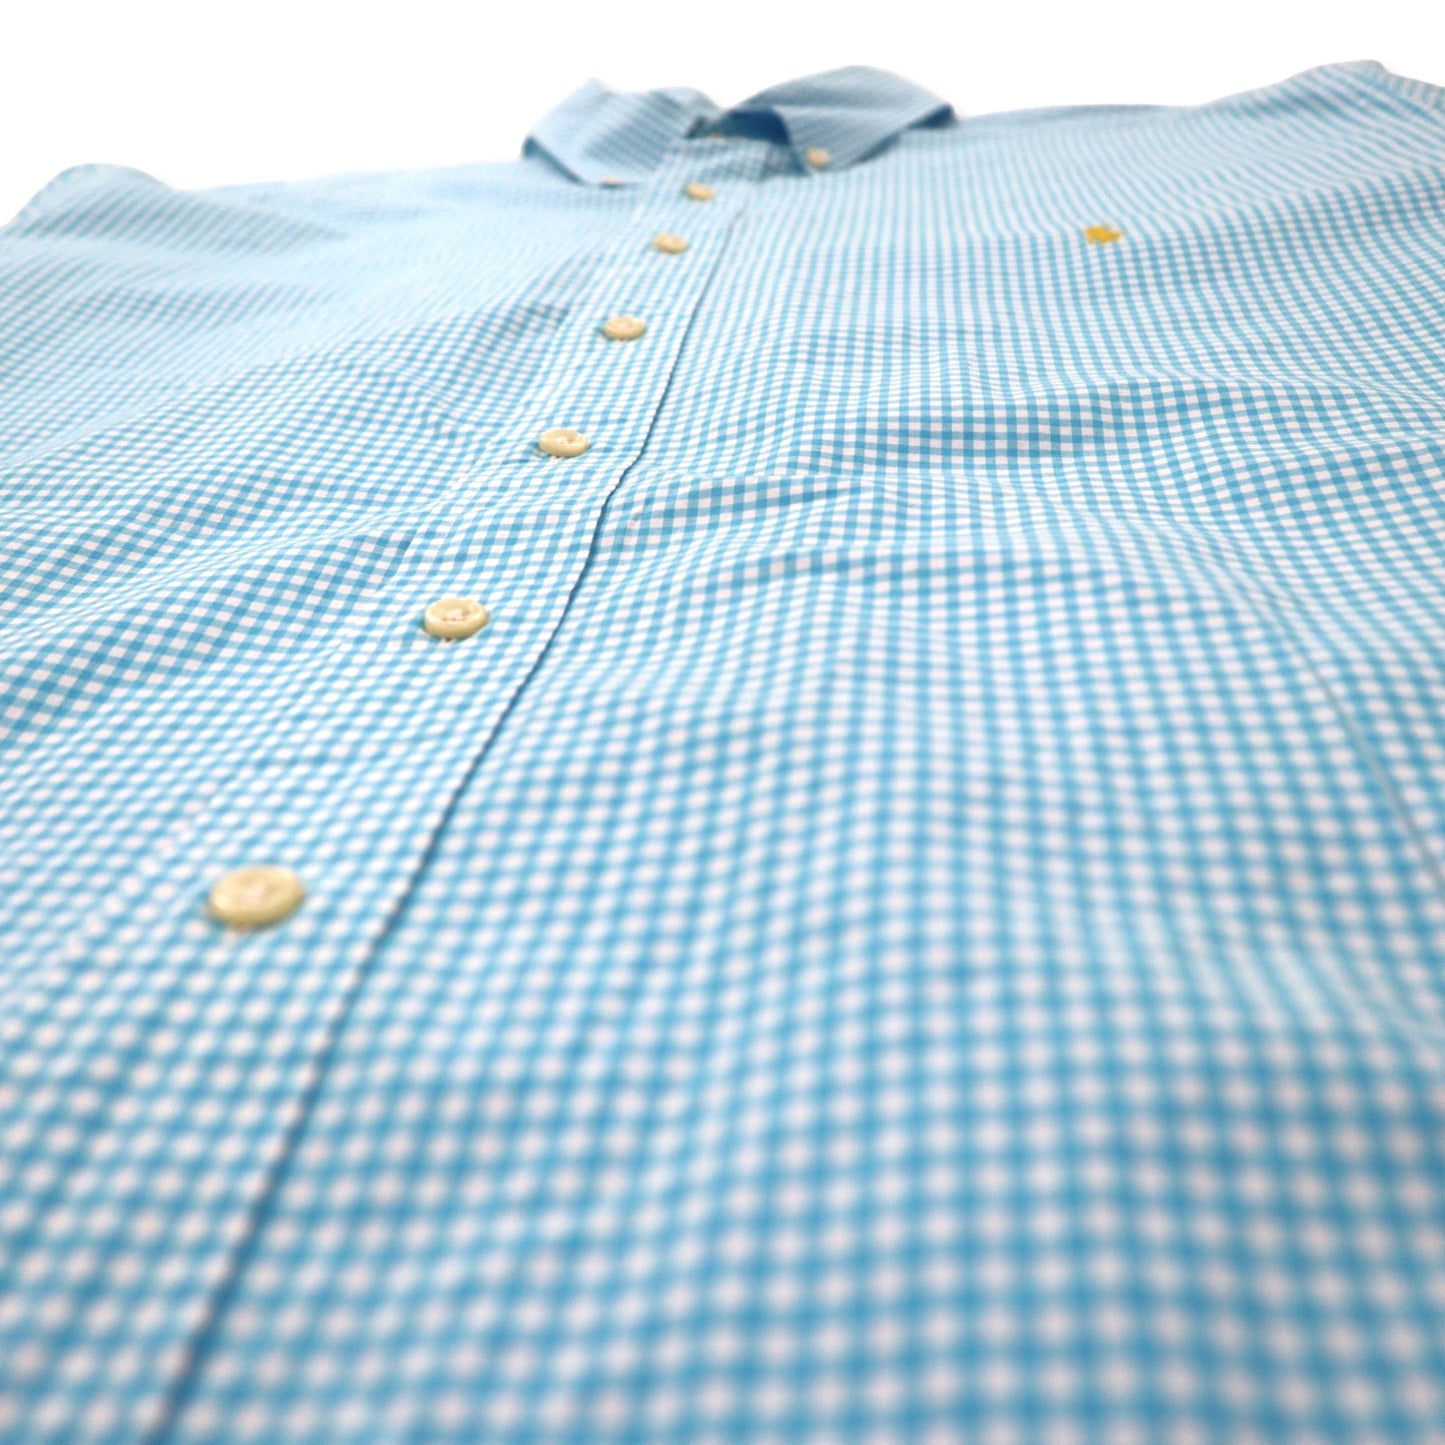 RALPH LAUREN ボタンダウンシャツ XLT TALL ブルー ギンガムチェック コットン スモールポニー刺繍